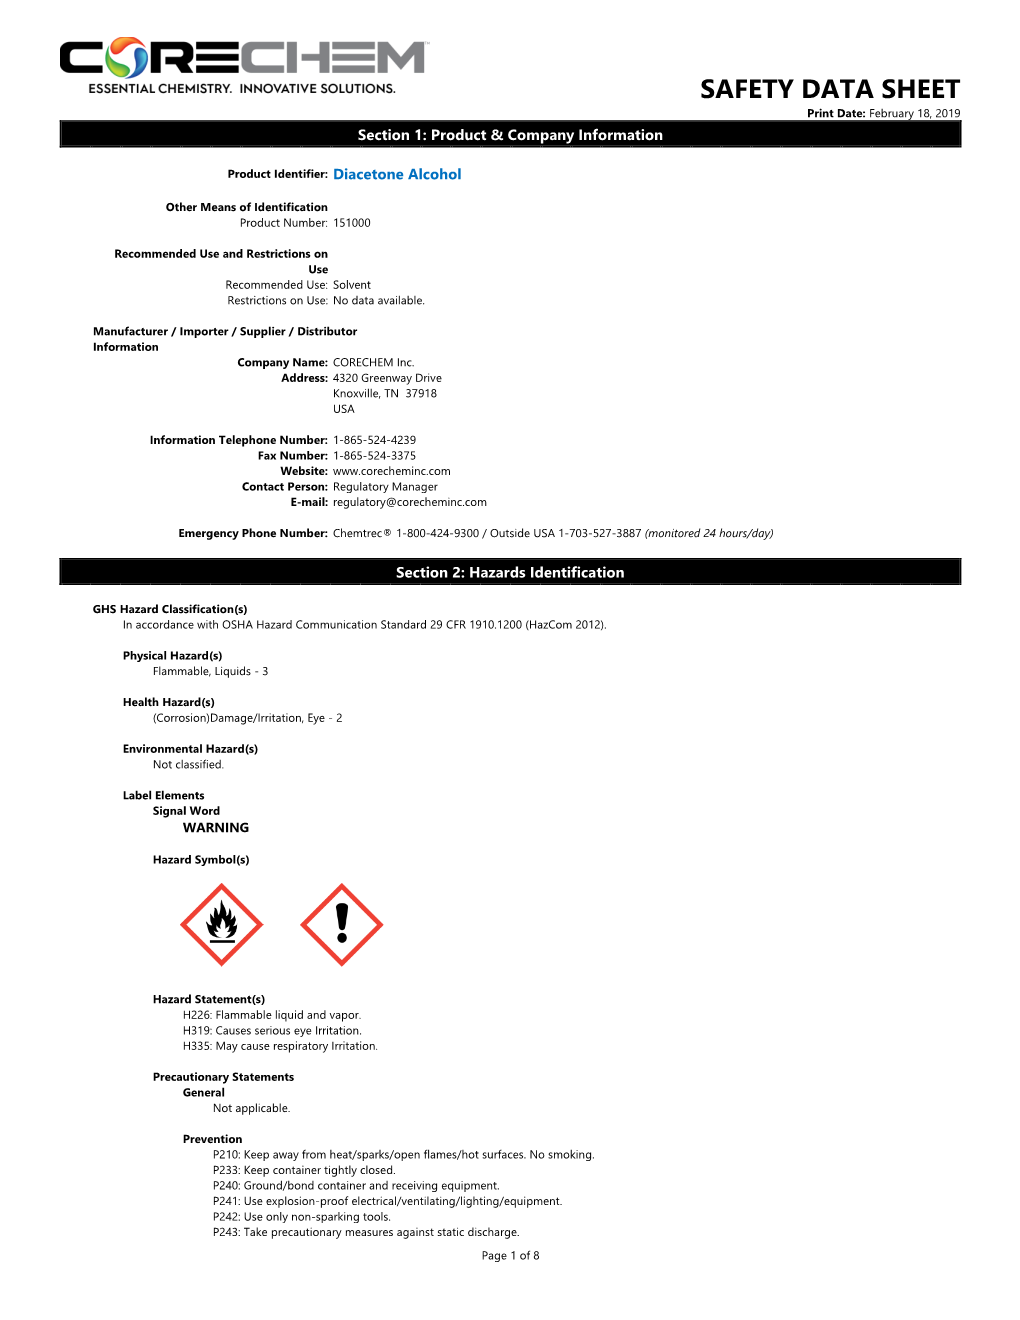 Diacetone Alcohol Safety Data Sheet